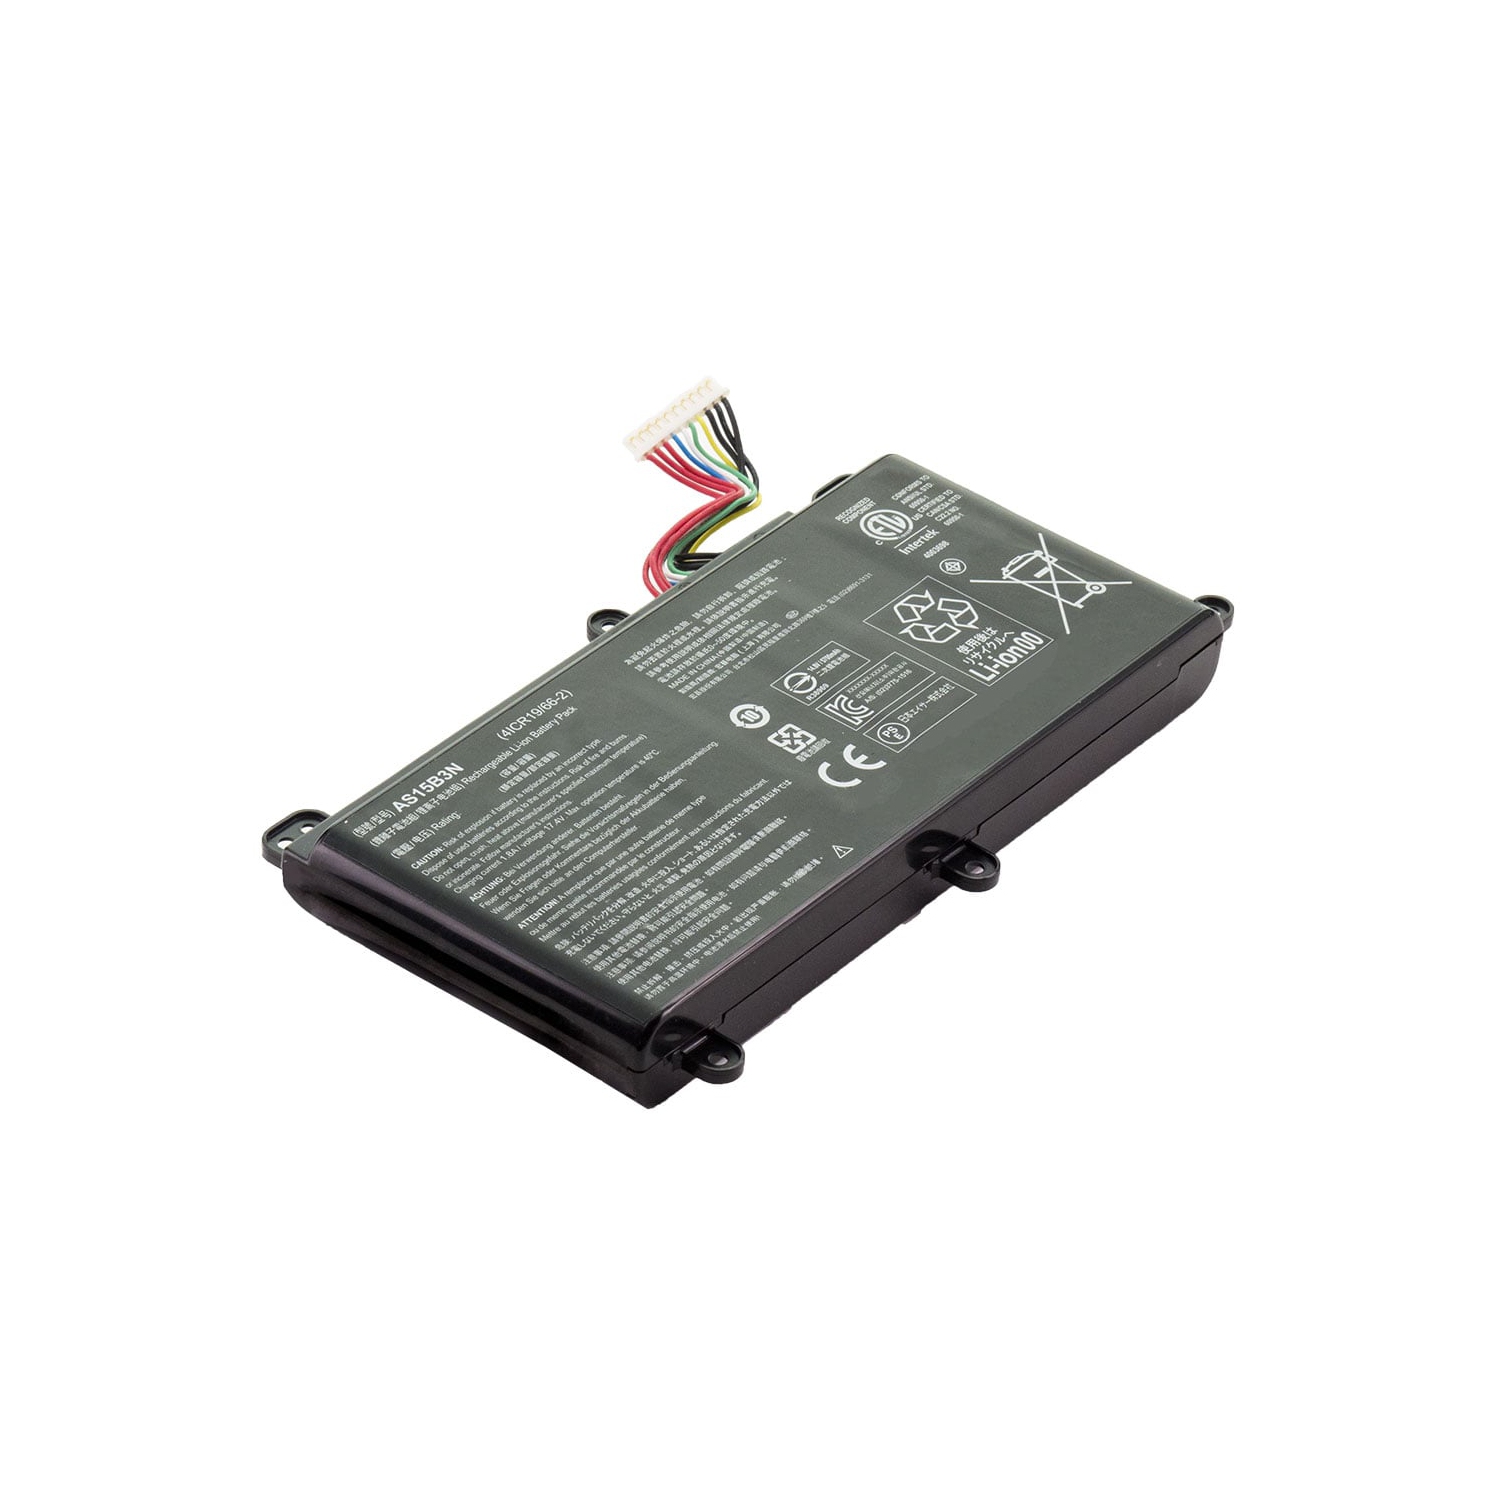 BATTDEPOT NEW Laptop Battery for Acer Predator 15 G9-592-7925 AS15B3N KT.00803.004 KT.00803.005